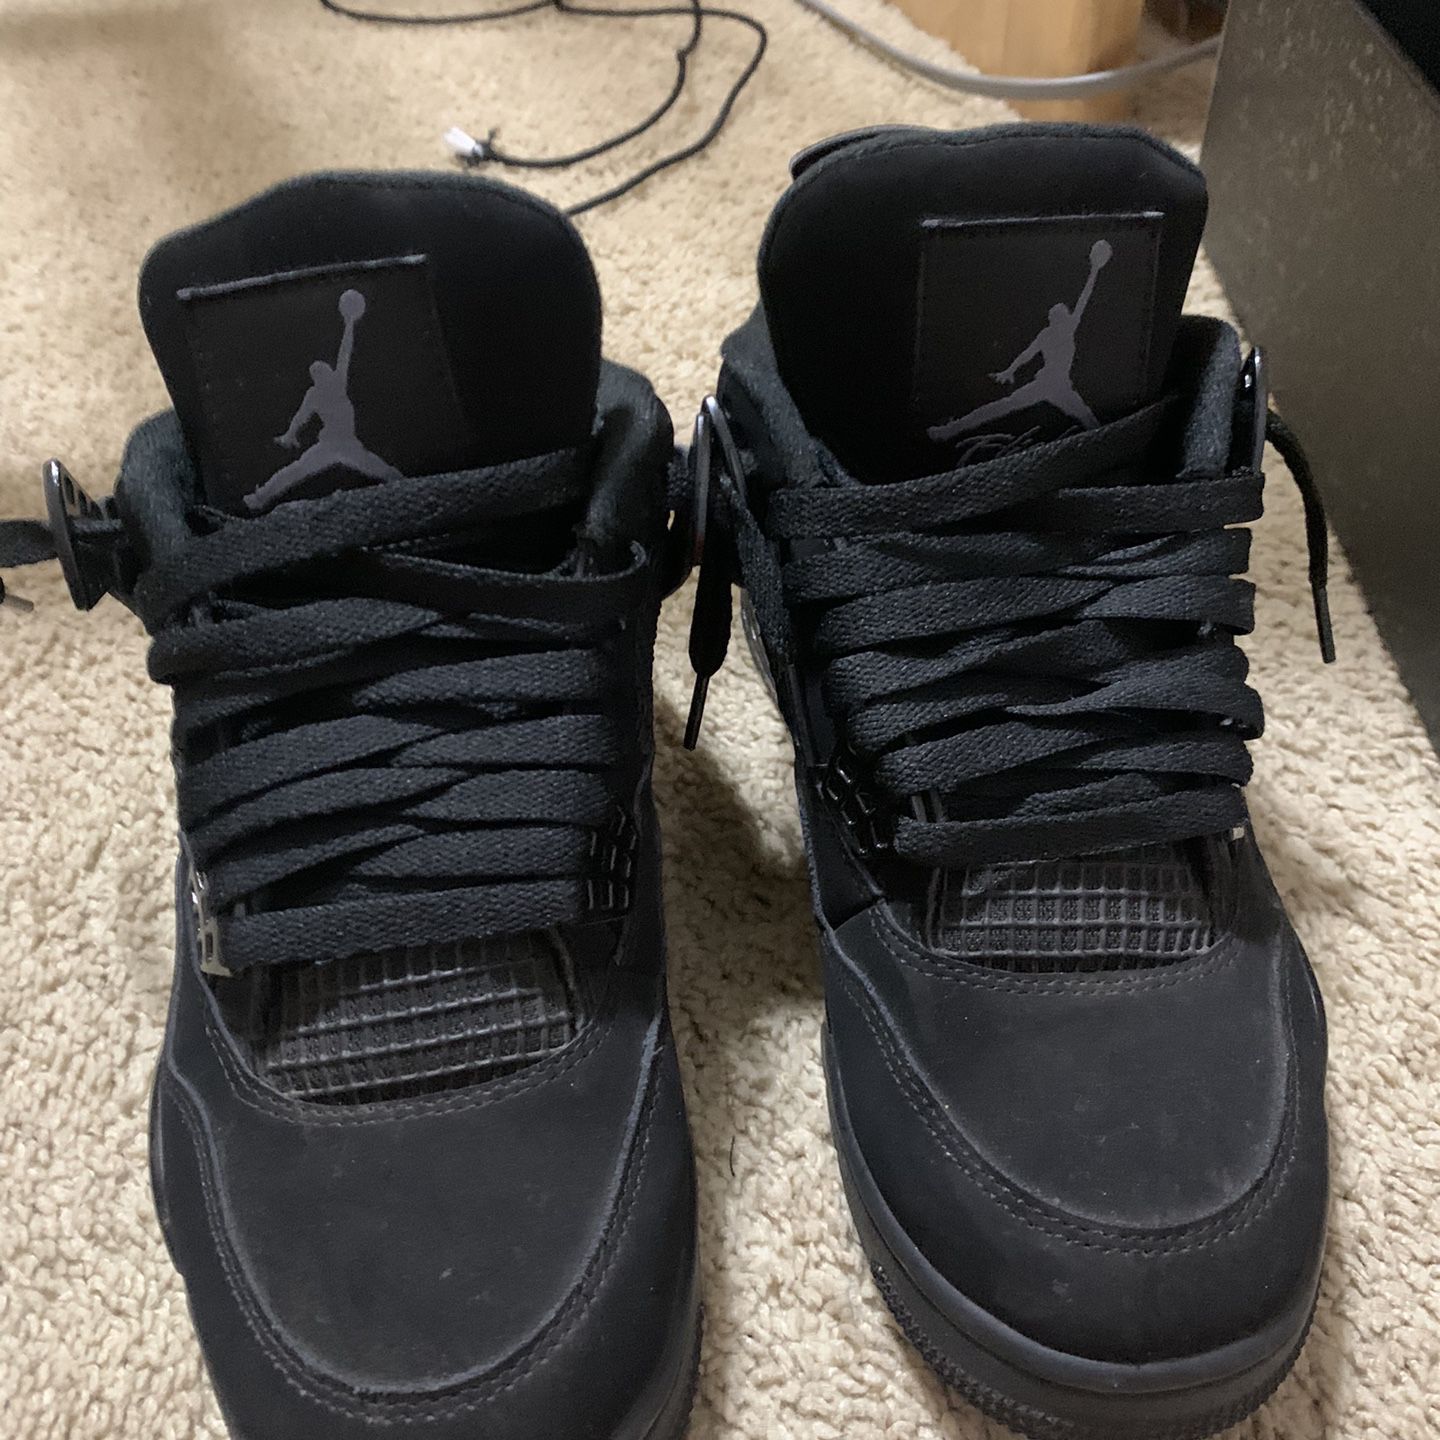 Air Jordan 4 Black cats Size 7